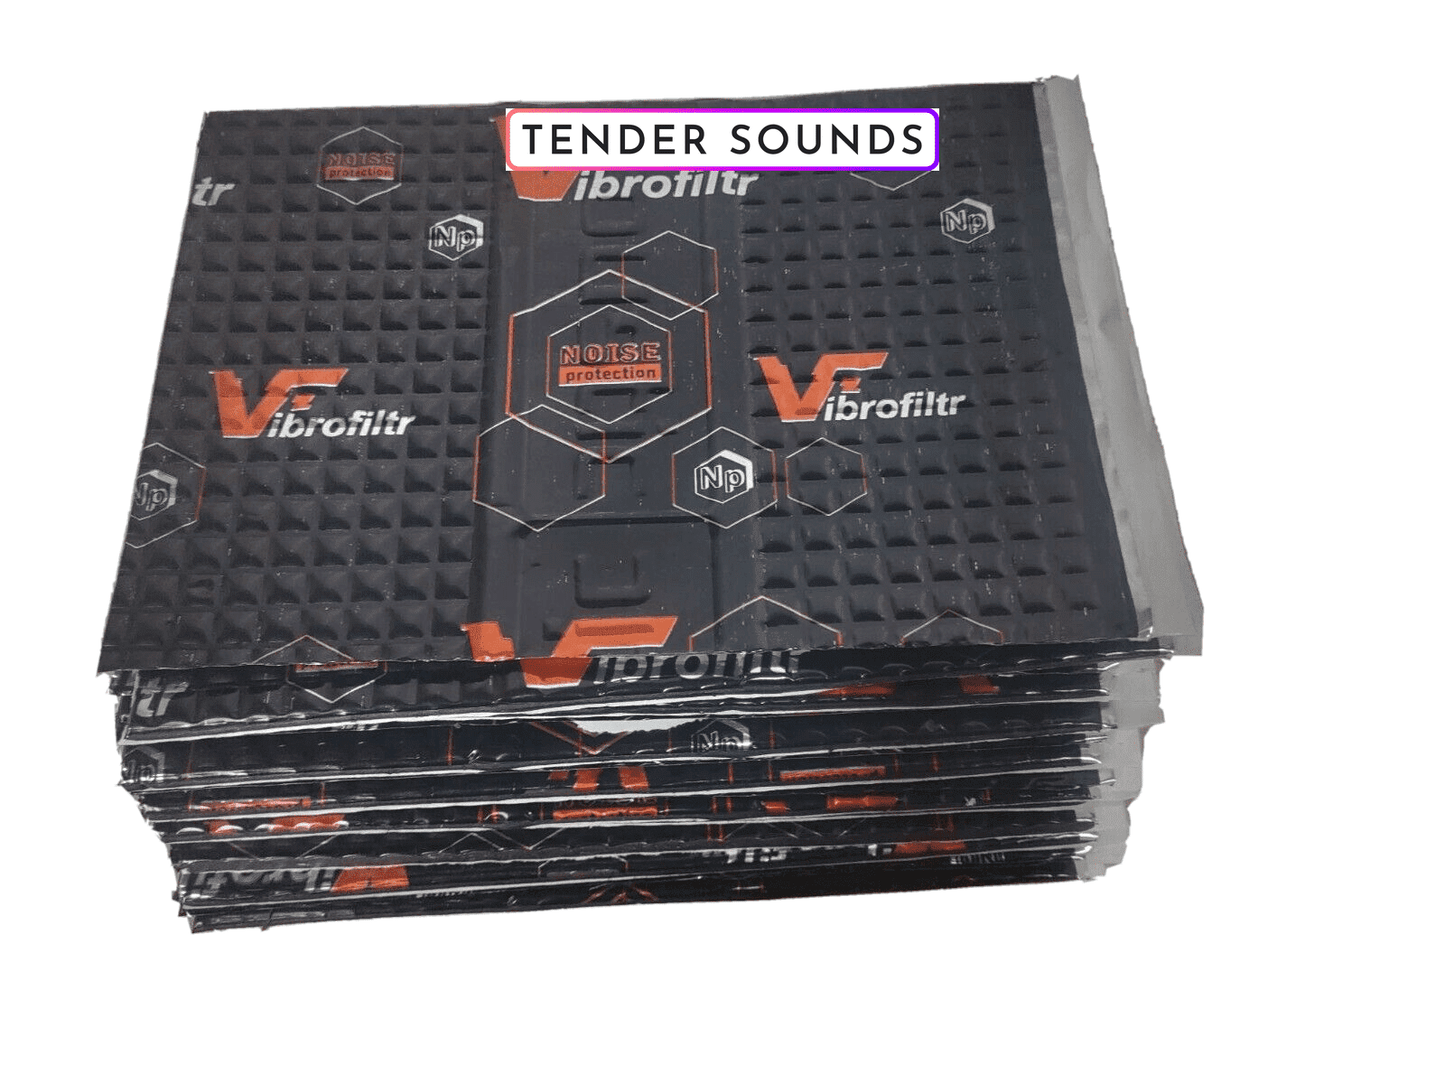 Vibrofiltr 4mm Sound Deadening 500mm x 350mm x 10 sheets